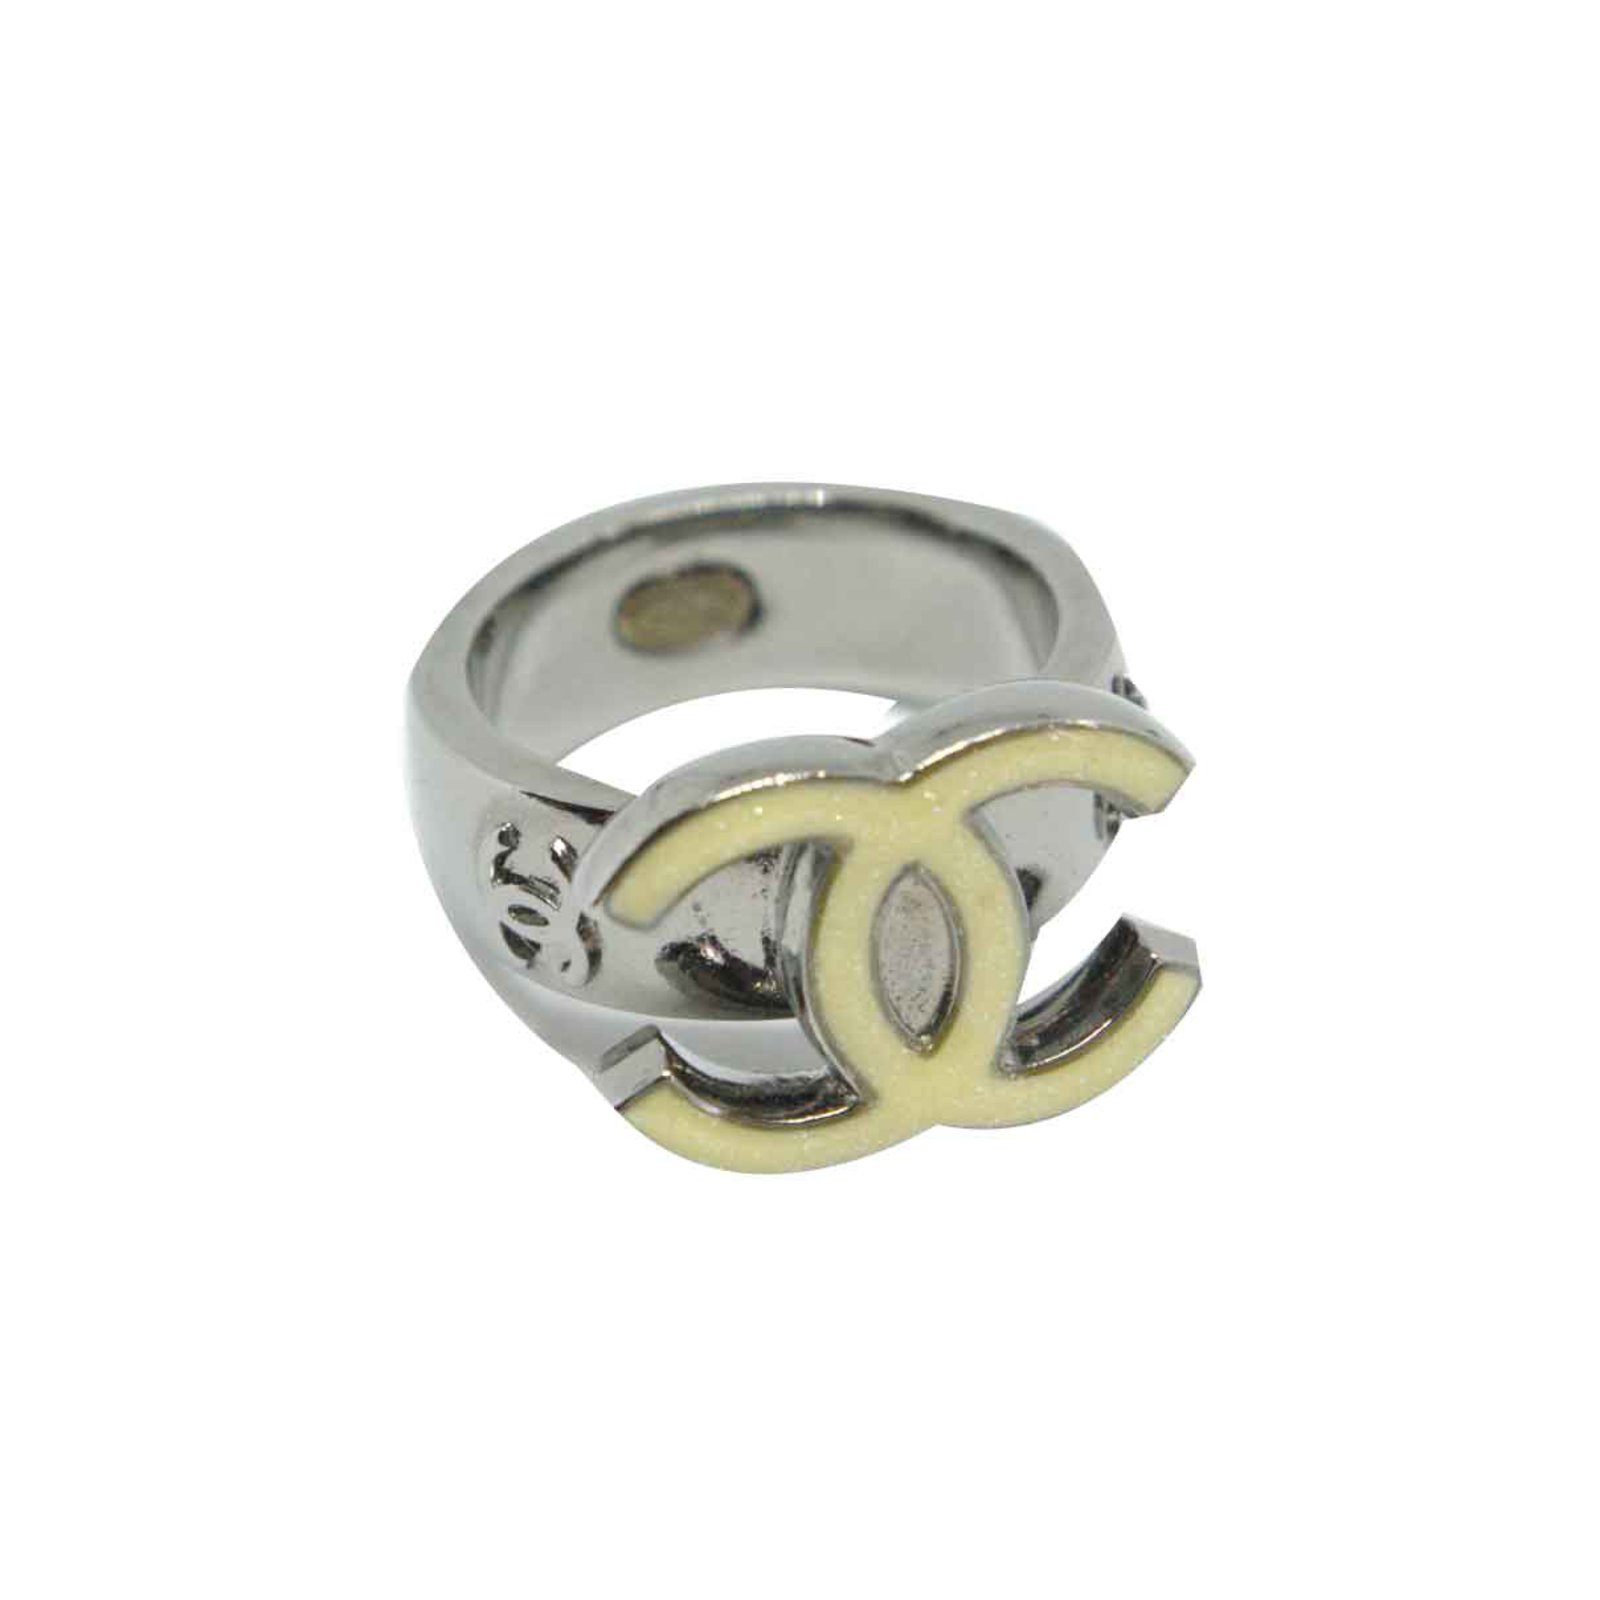 Chanel silver metal ring CC